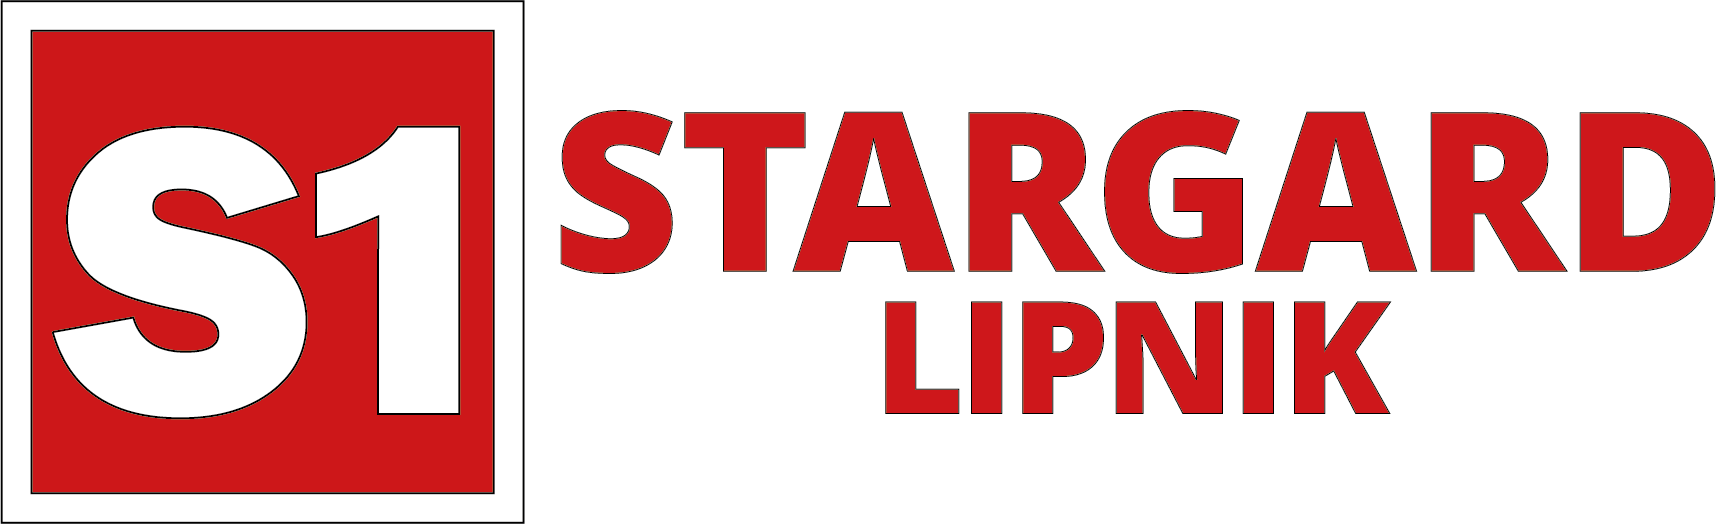 S1 Stargard Lipnik Logo